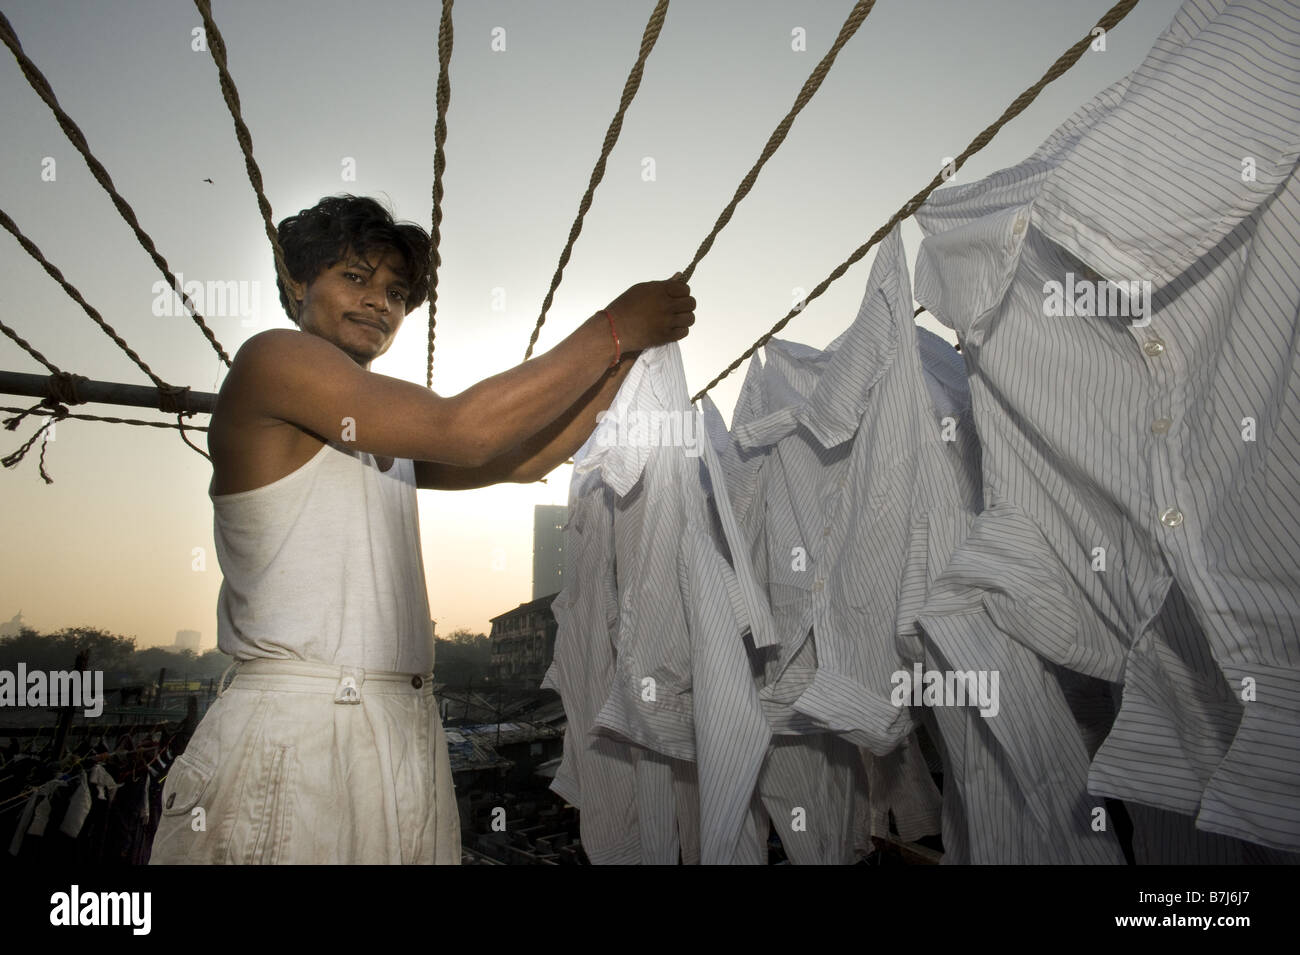 Die Mahalaxmi Dhobi Ghat in Mumbai, Indien. Stockfoto